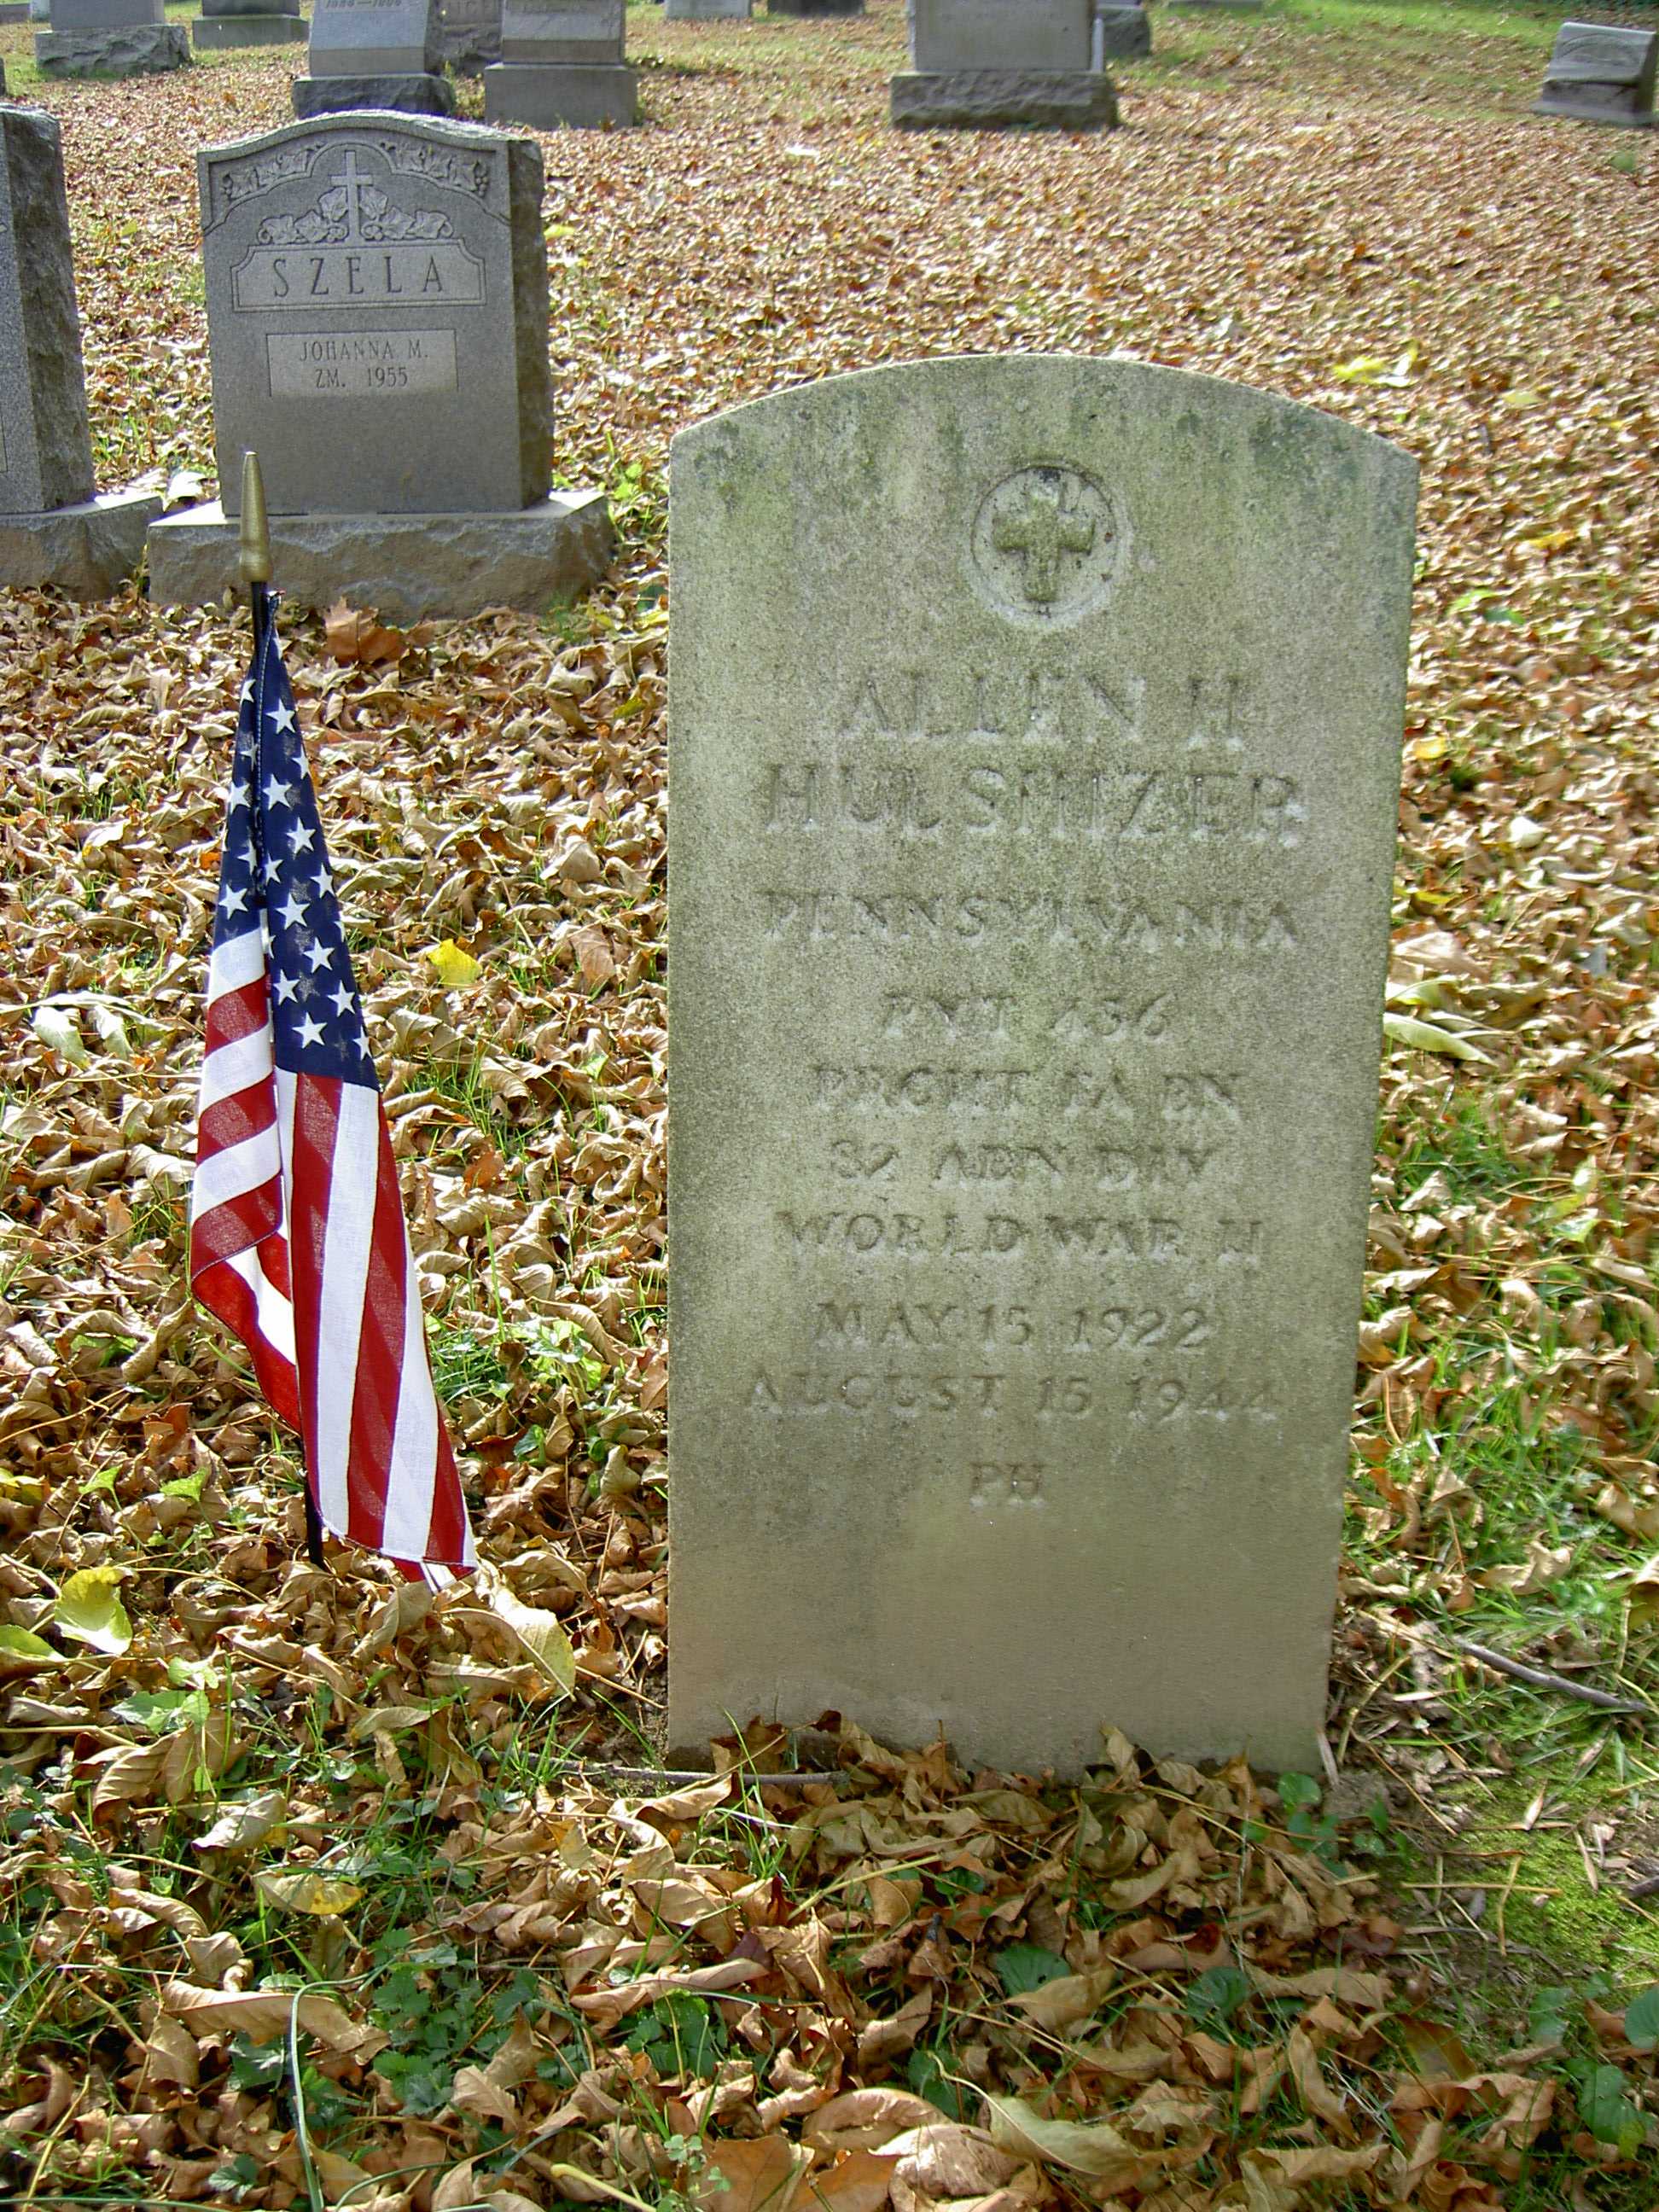 A. Hulshizer (Grave)